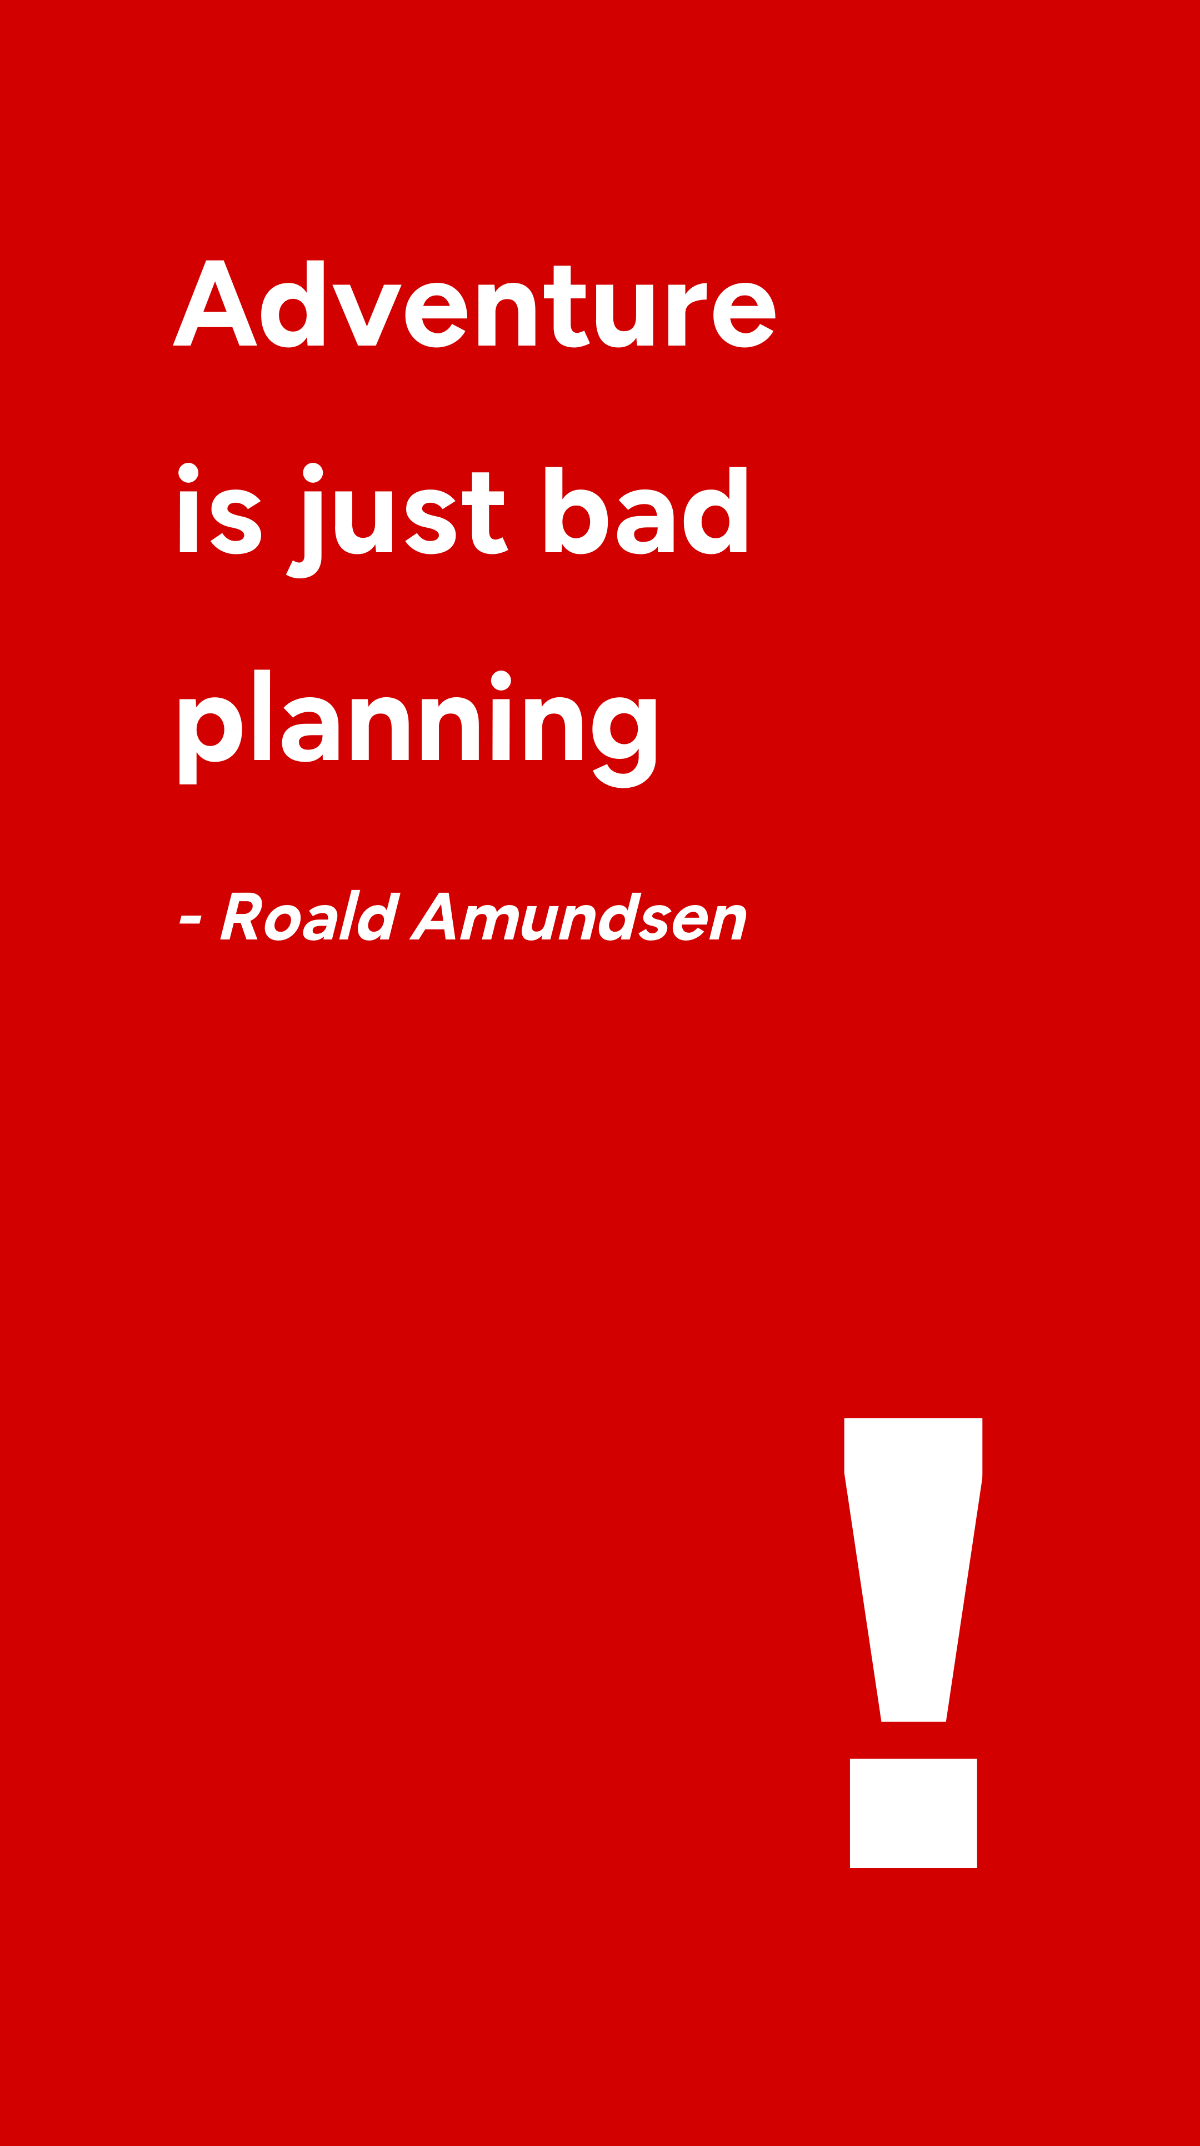 Roald Amundsen - Adventure is just bad planning Template